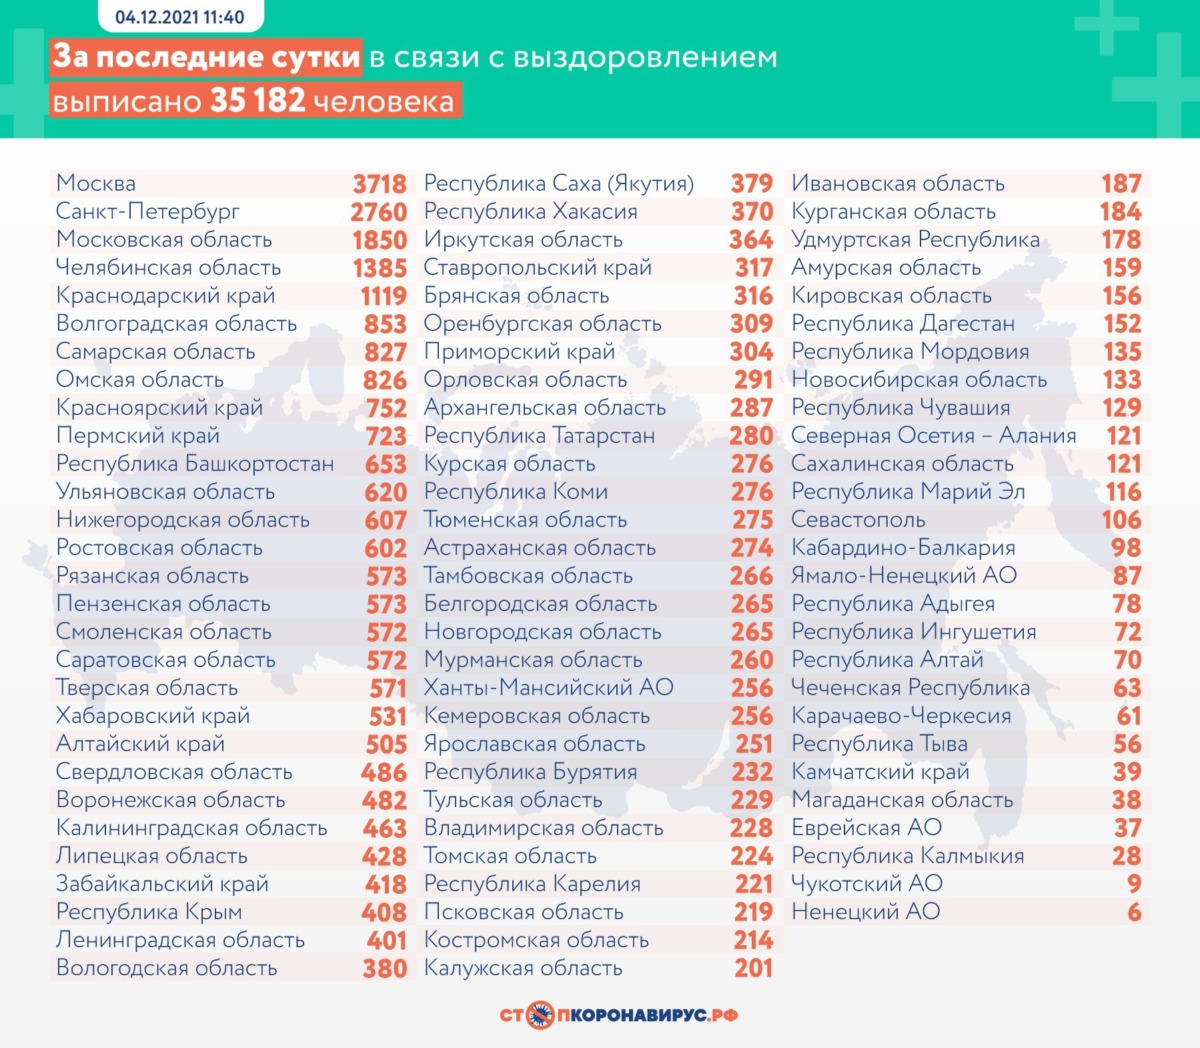 Оперативная статистика по коронавирусу в России на 4 декабря